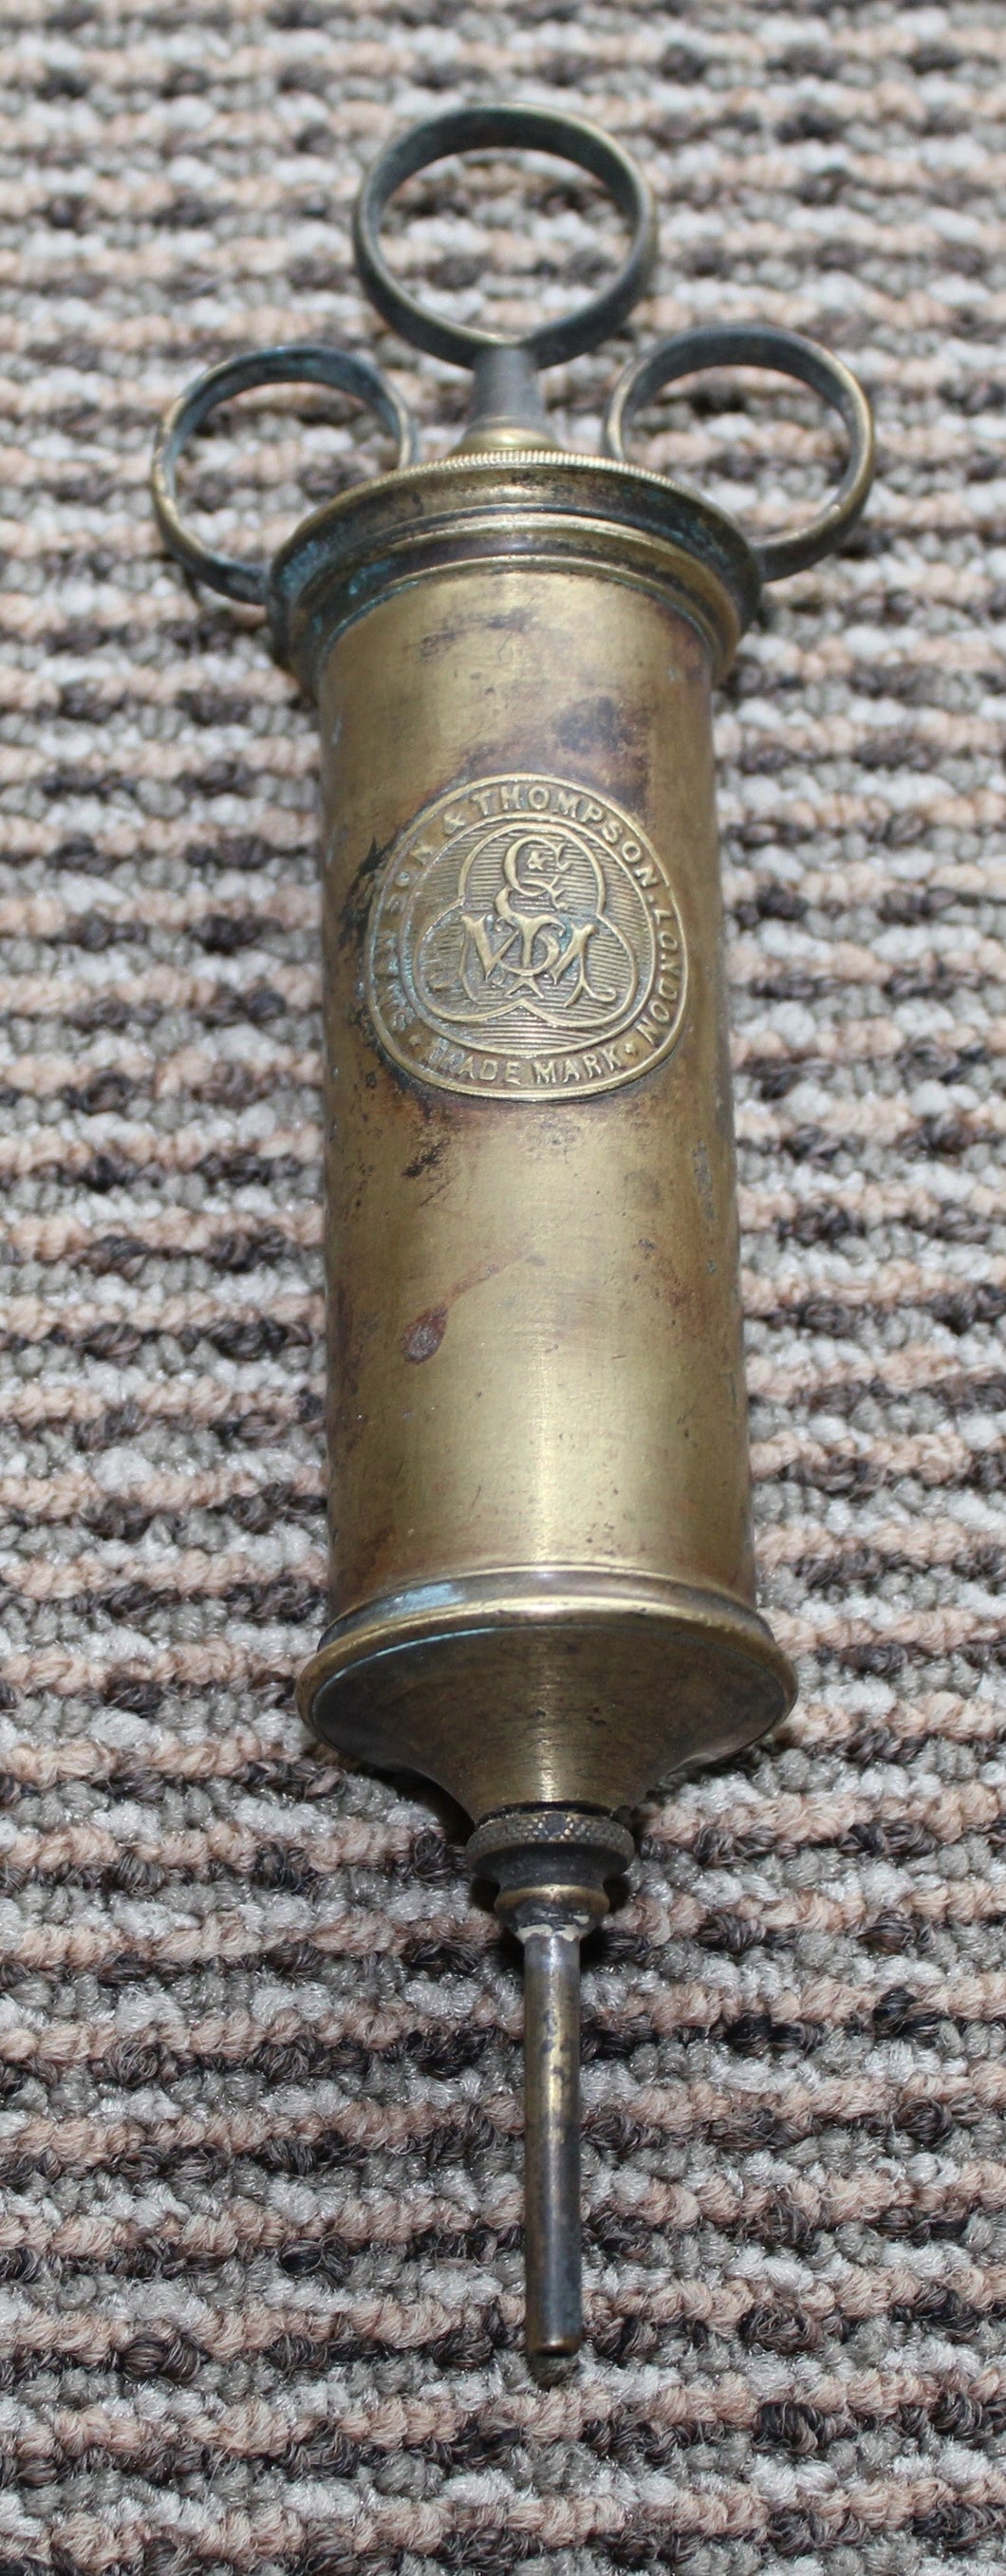 Antique Medical Pump / Ear Syringe - S. Maw Son & Thompson, London - Brass - circa 1880